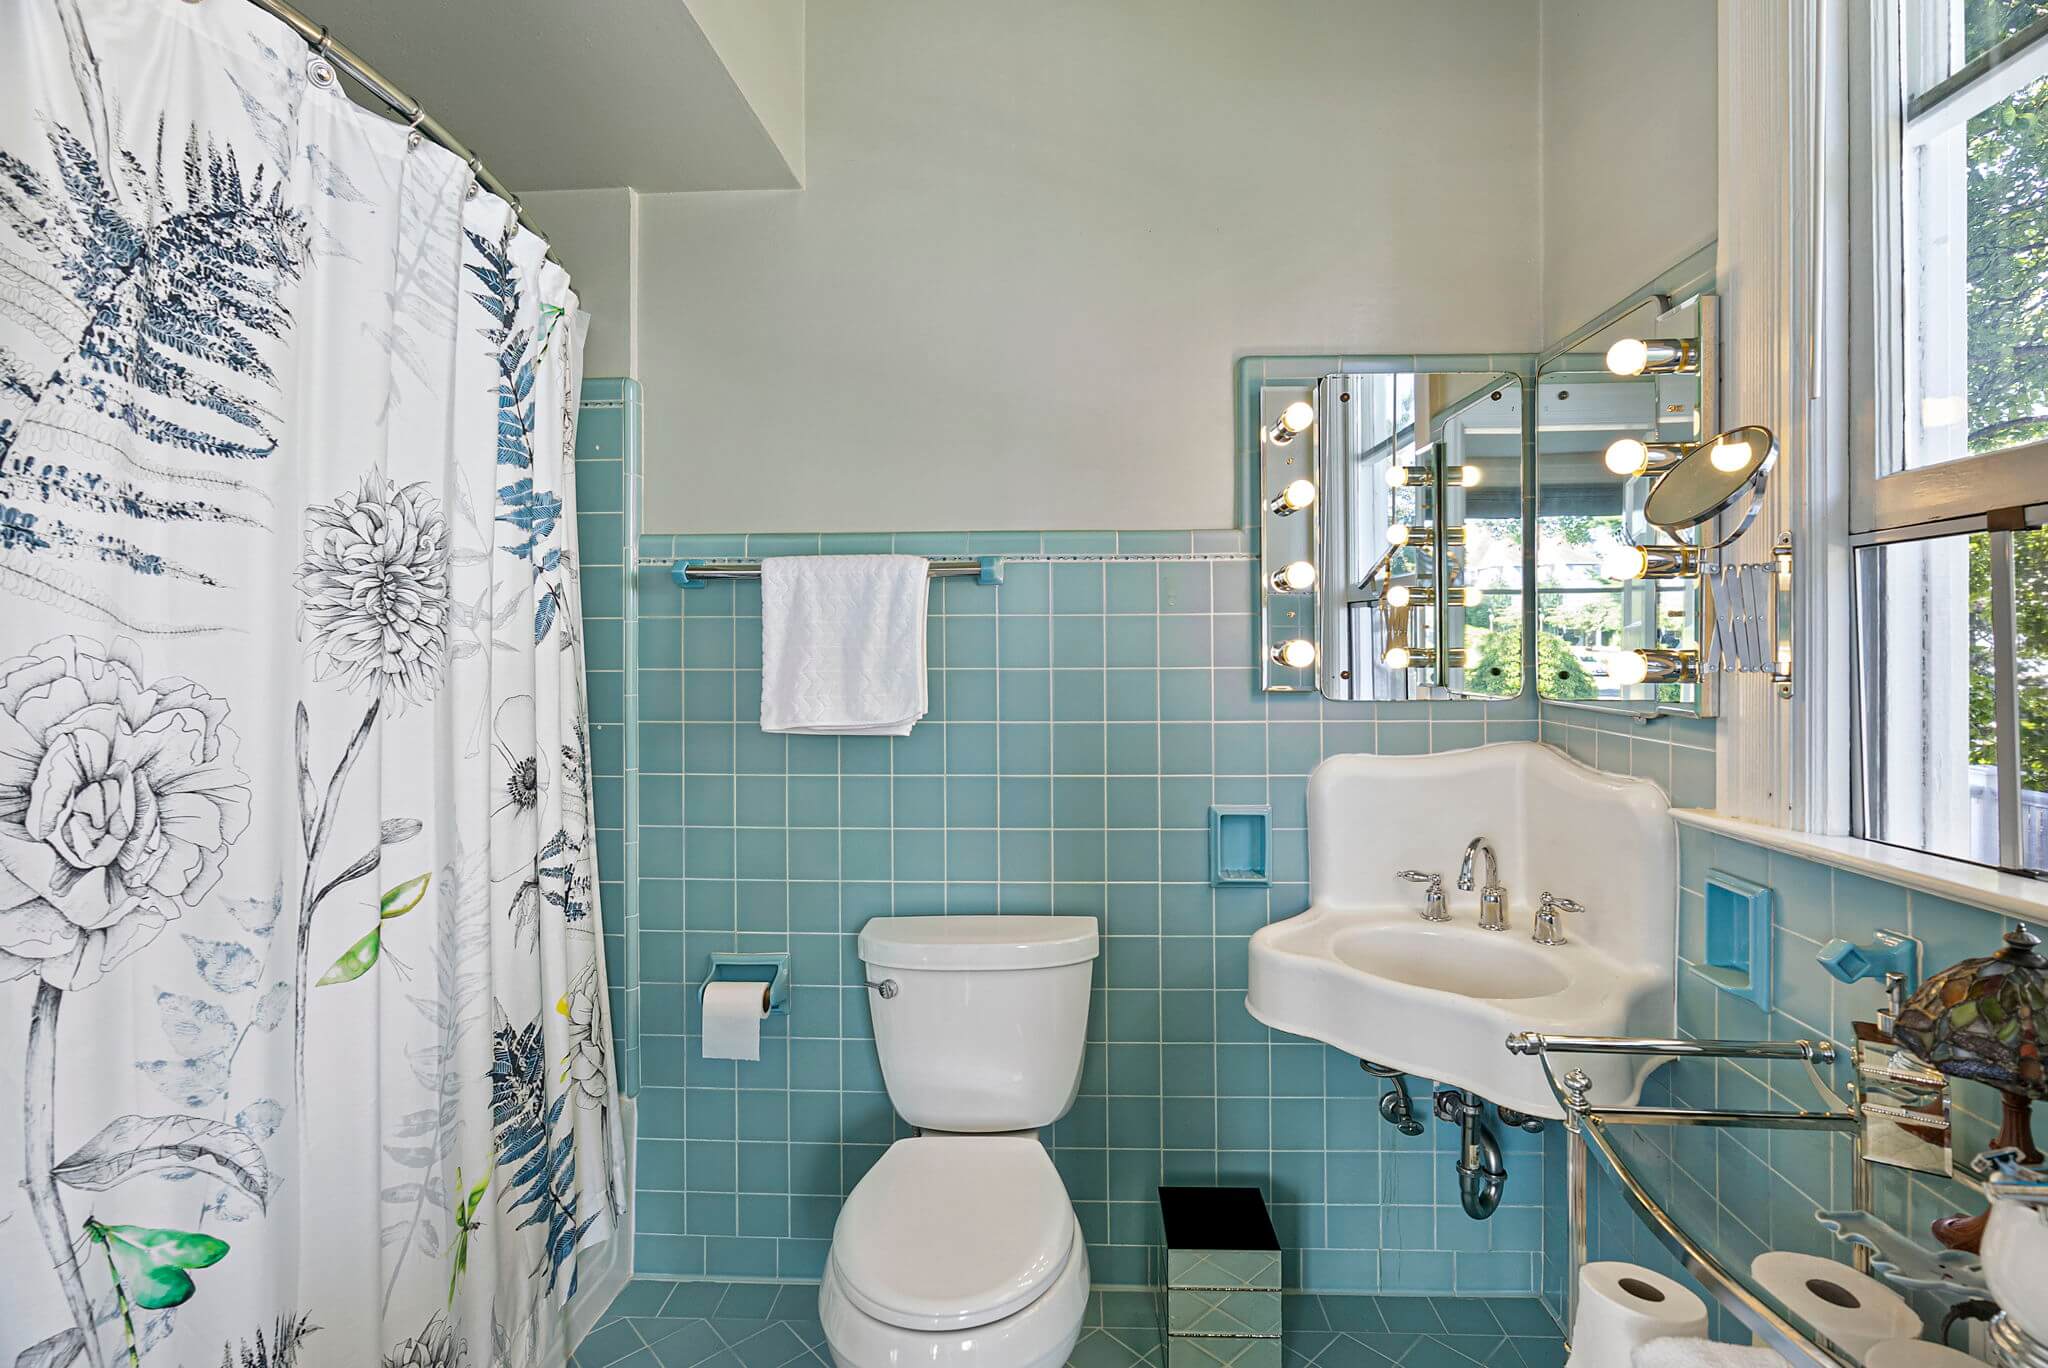 En suite primary bathroom with vintage tile and corner sink